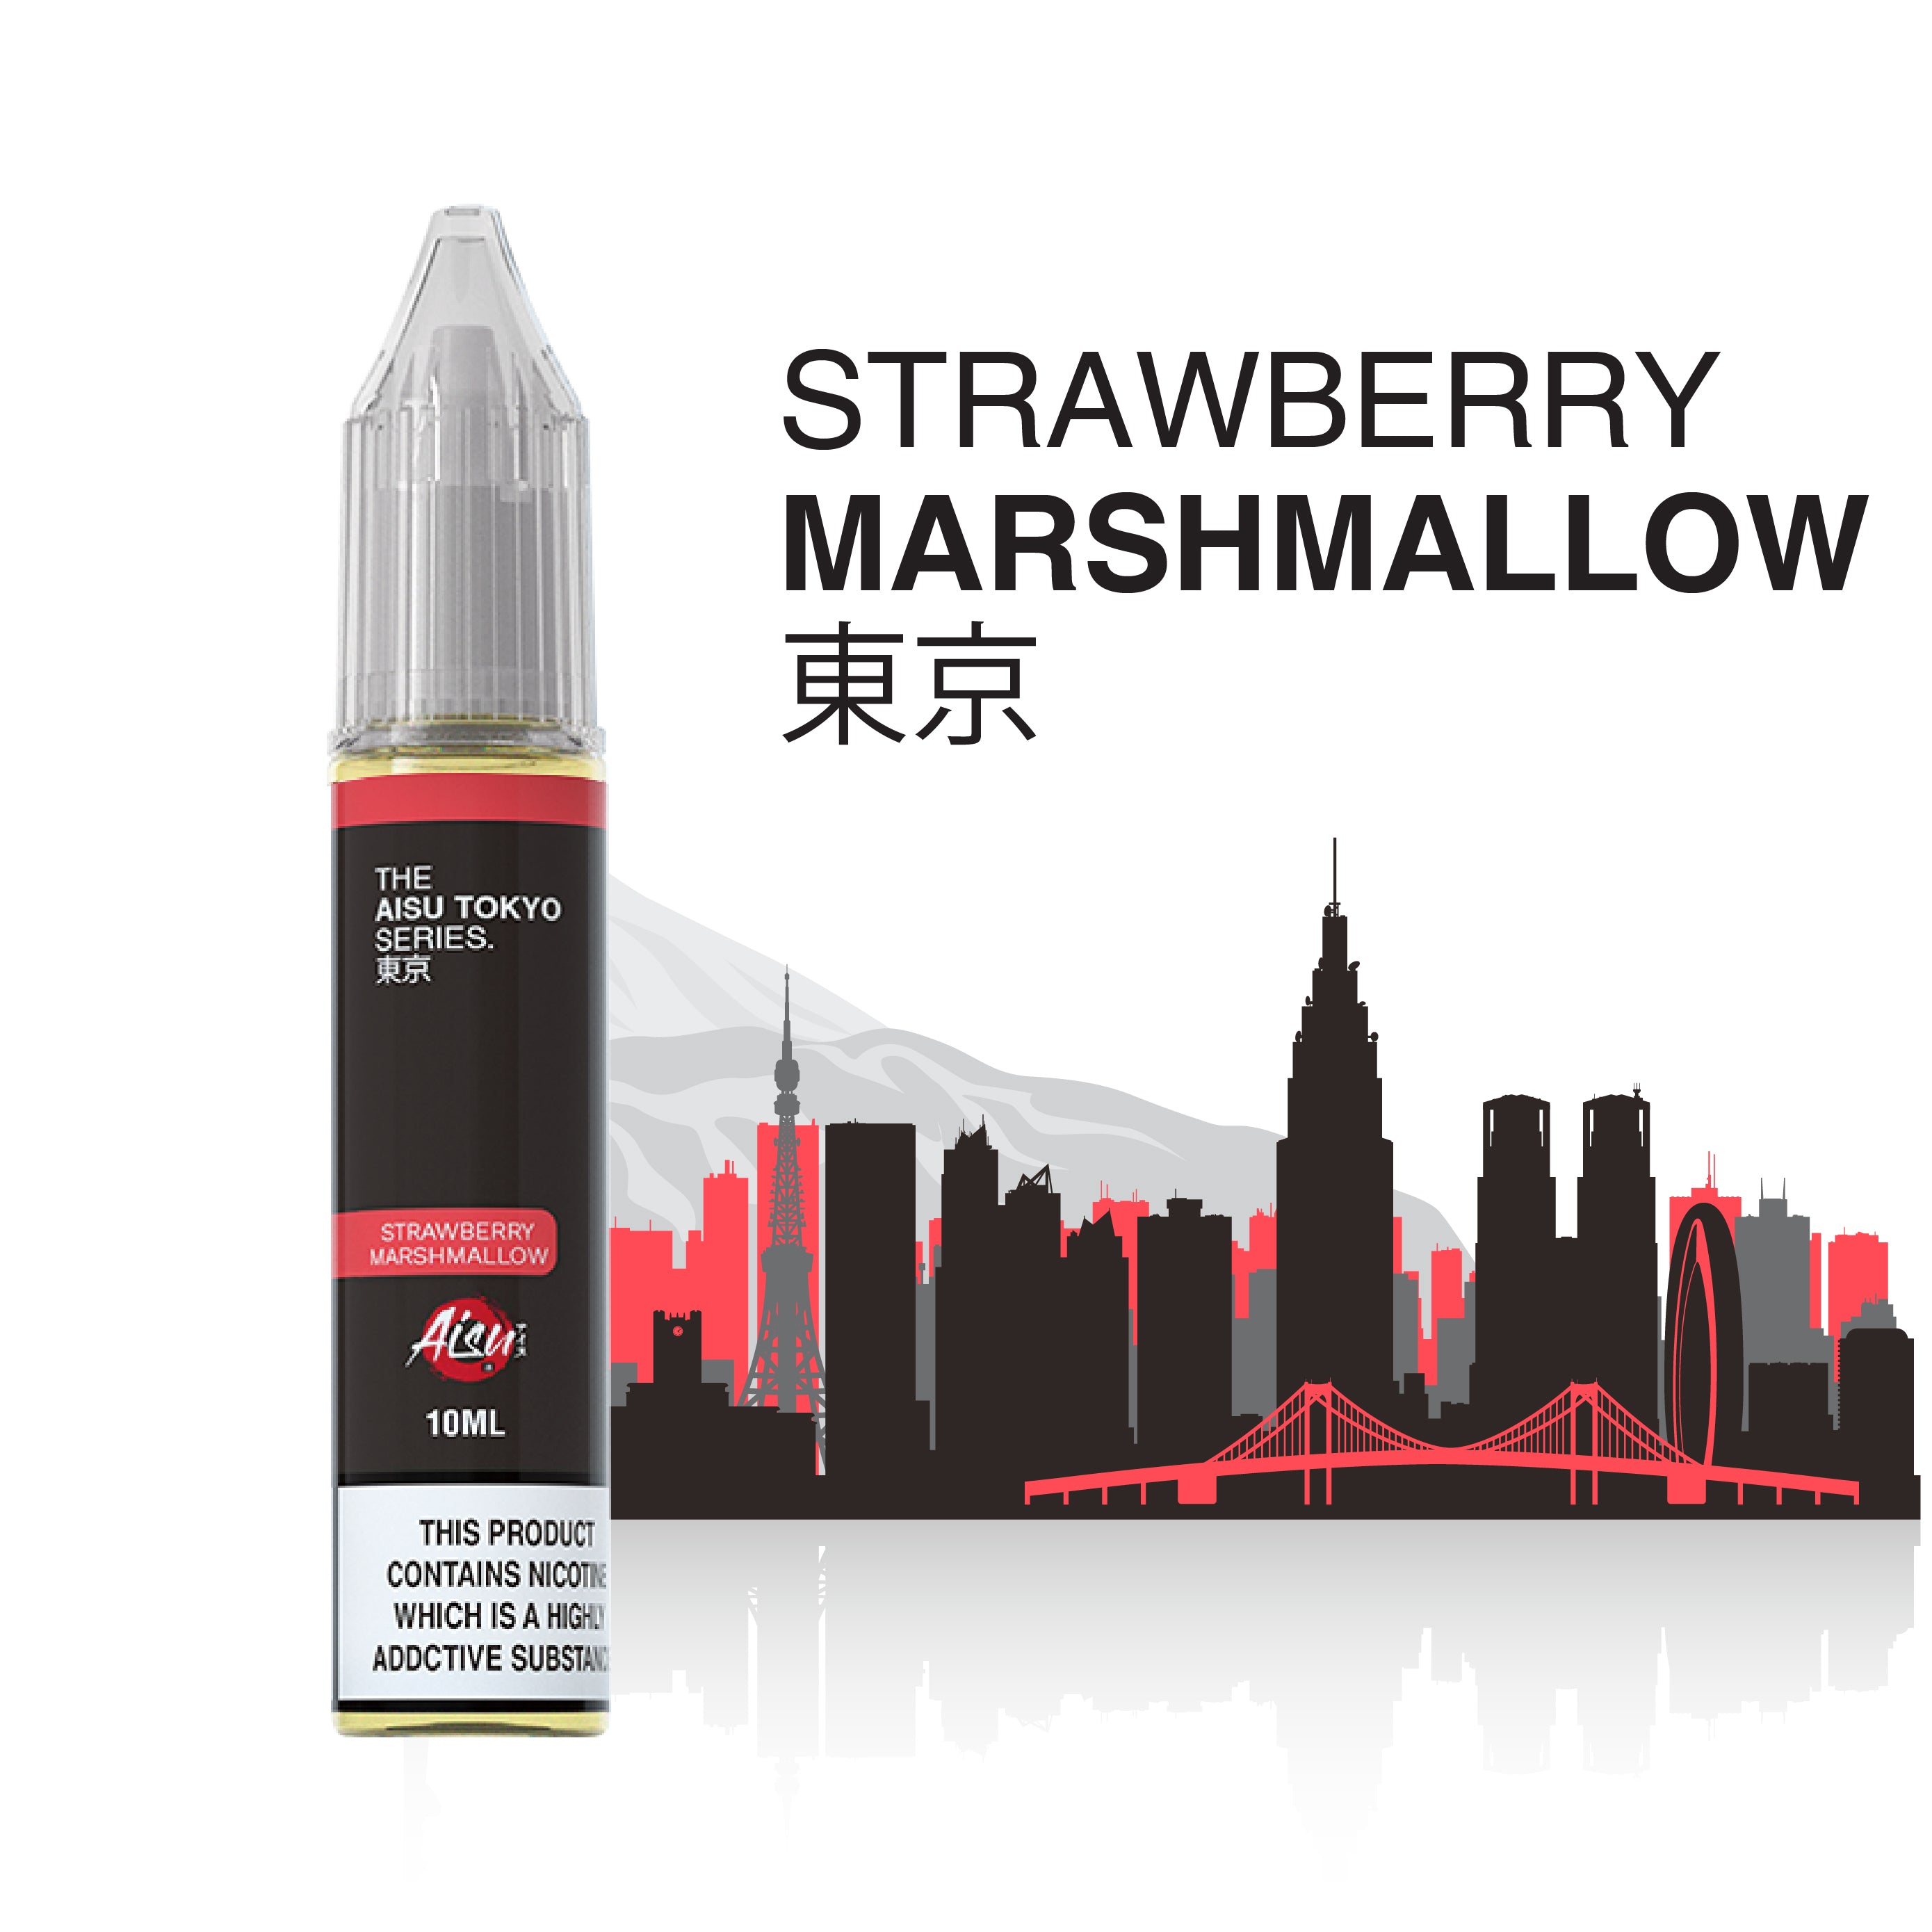 AISU TOKYO Strawberry Marshmallow 10ml Nic Salts e-liquid bottle